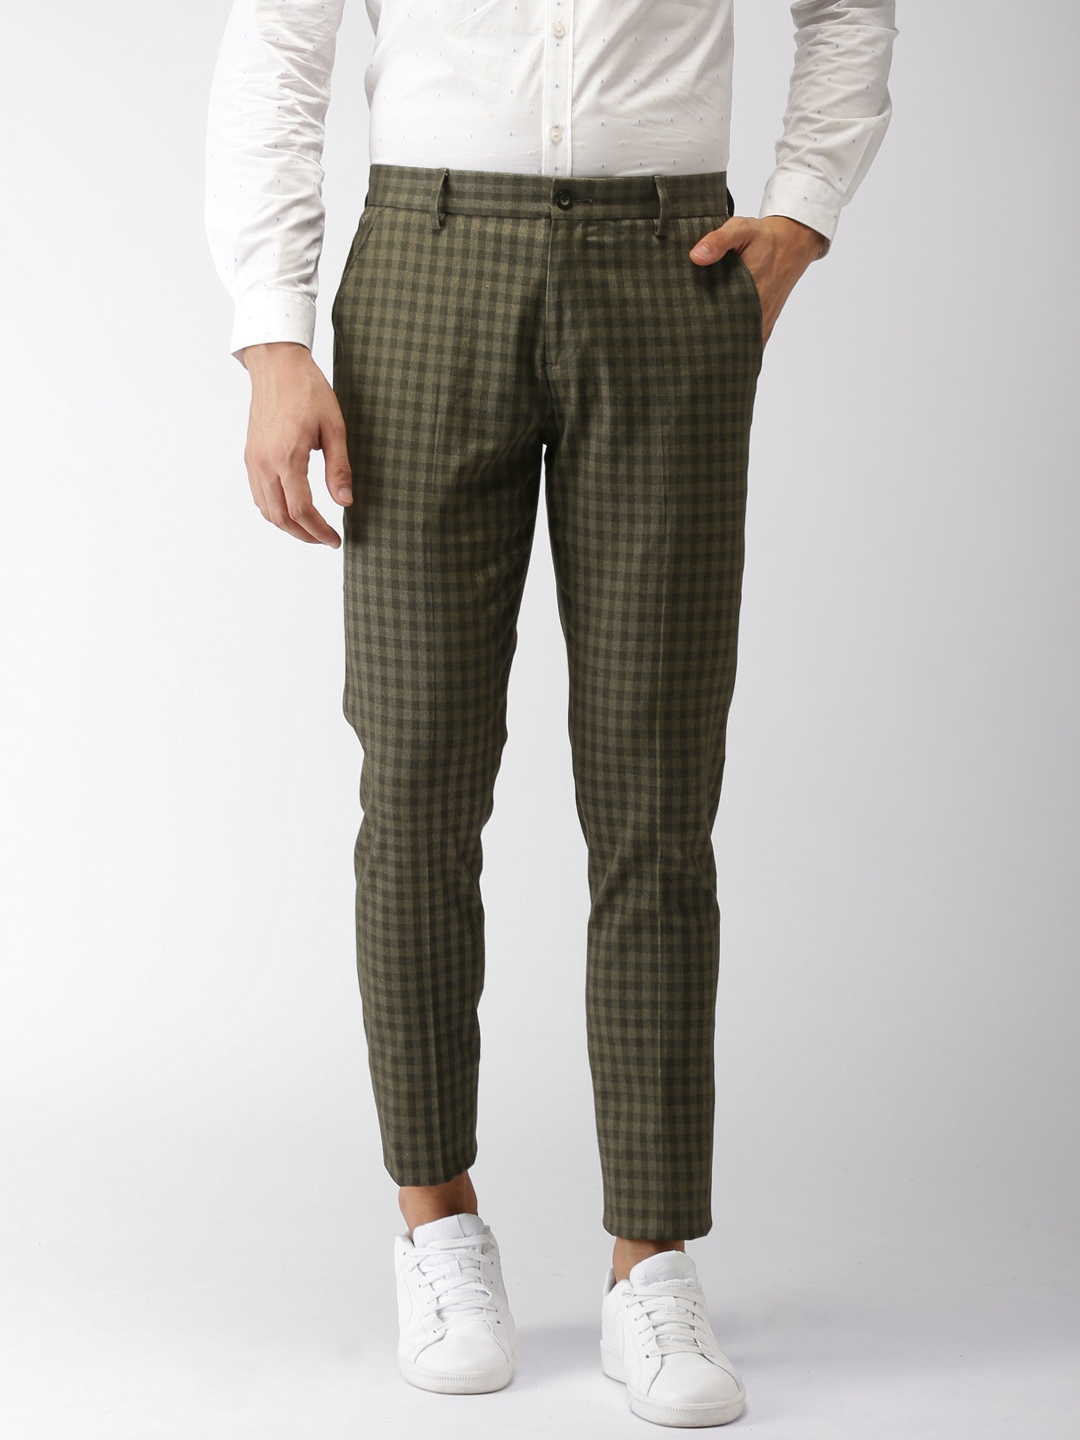 Buy Women Green Regular Fit Check Casual Trousers Online  764936  Allen  Solly